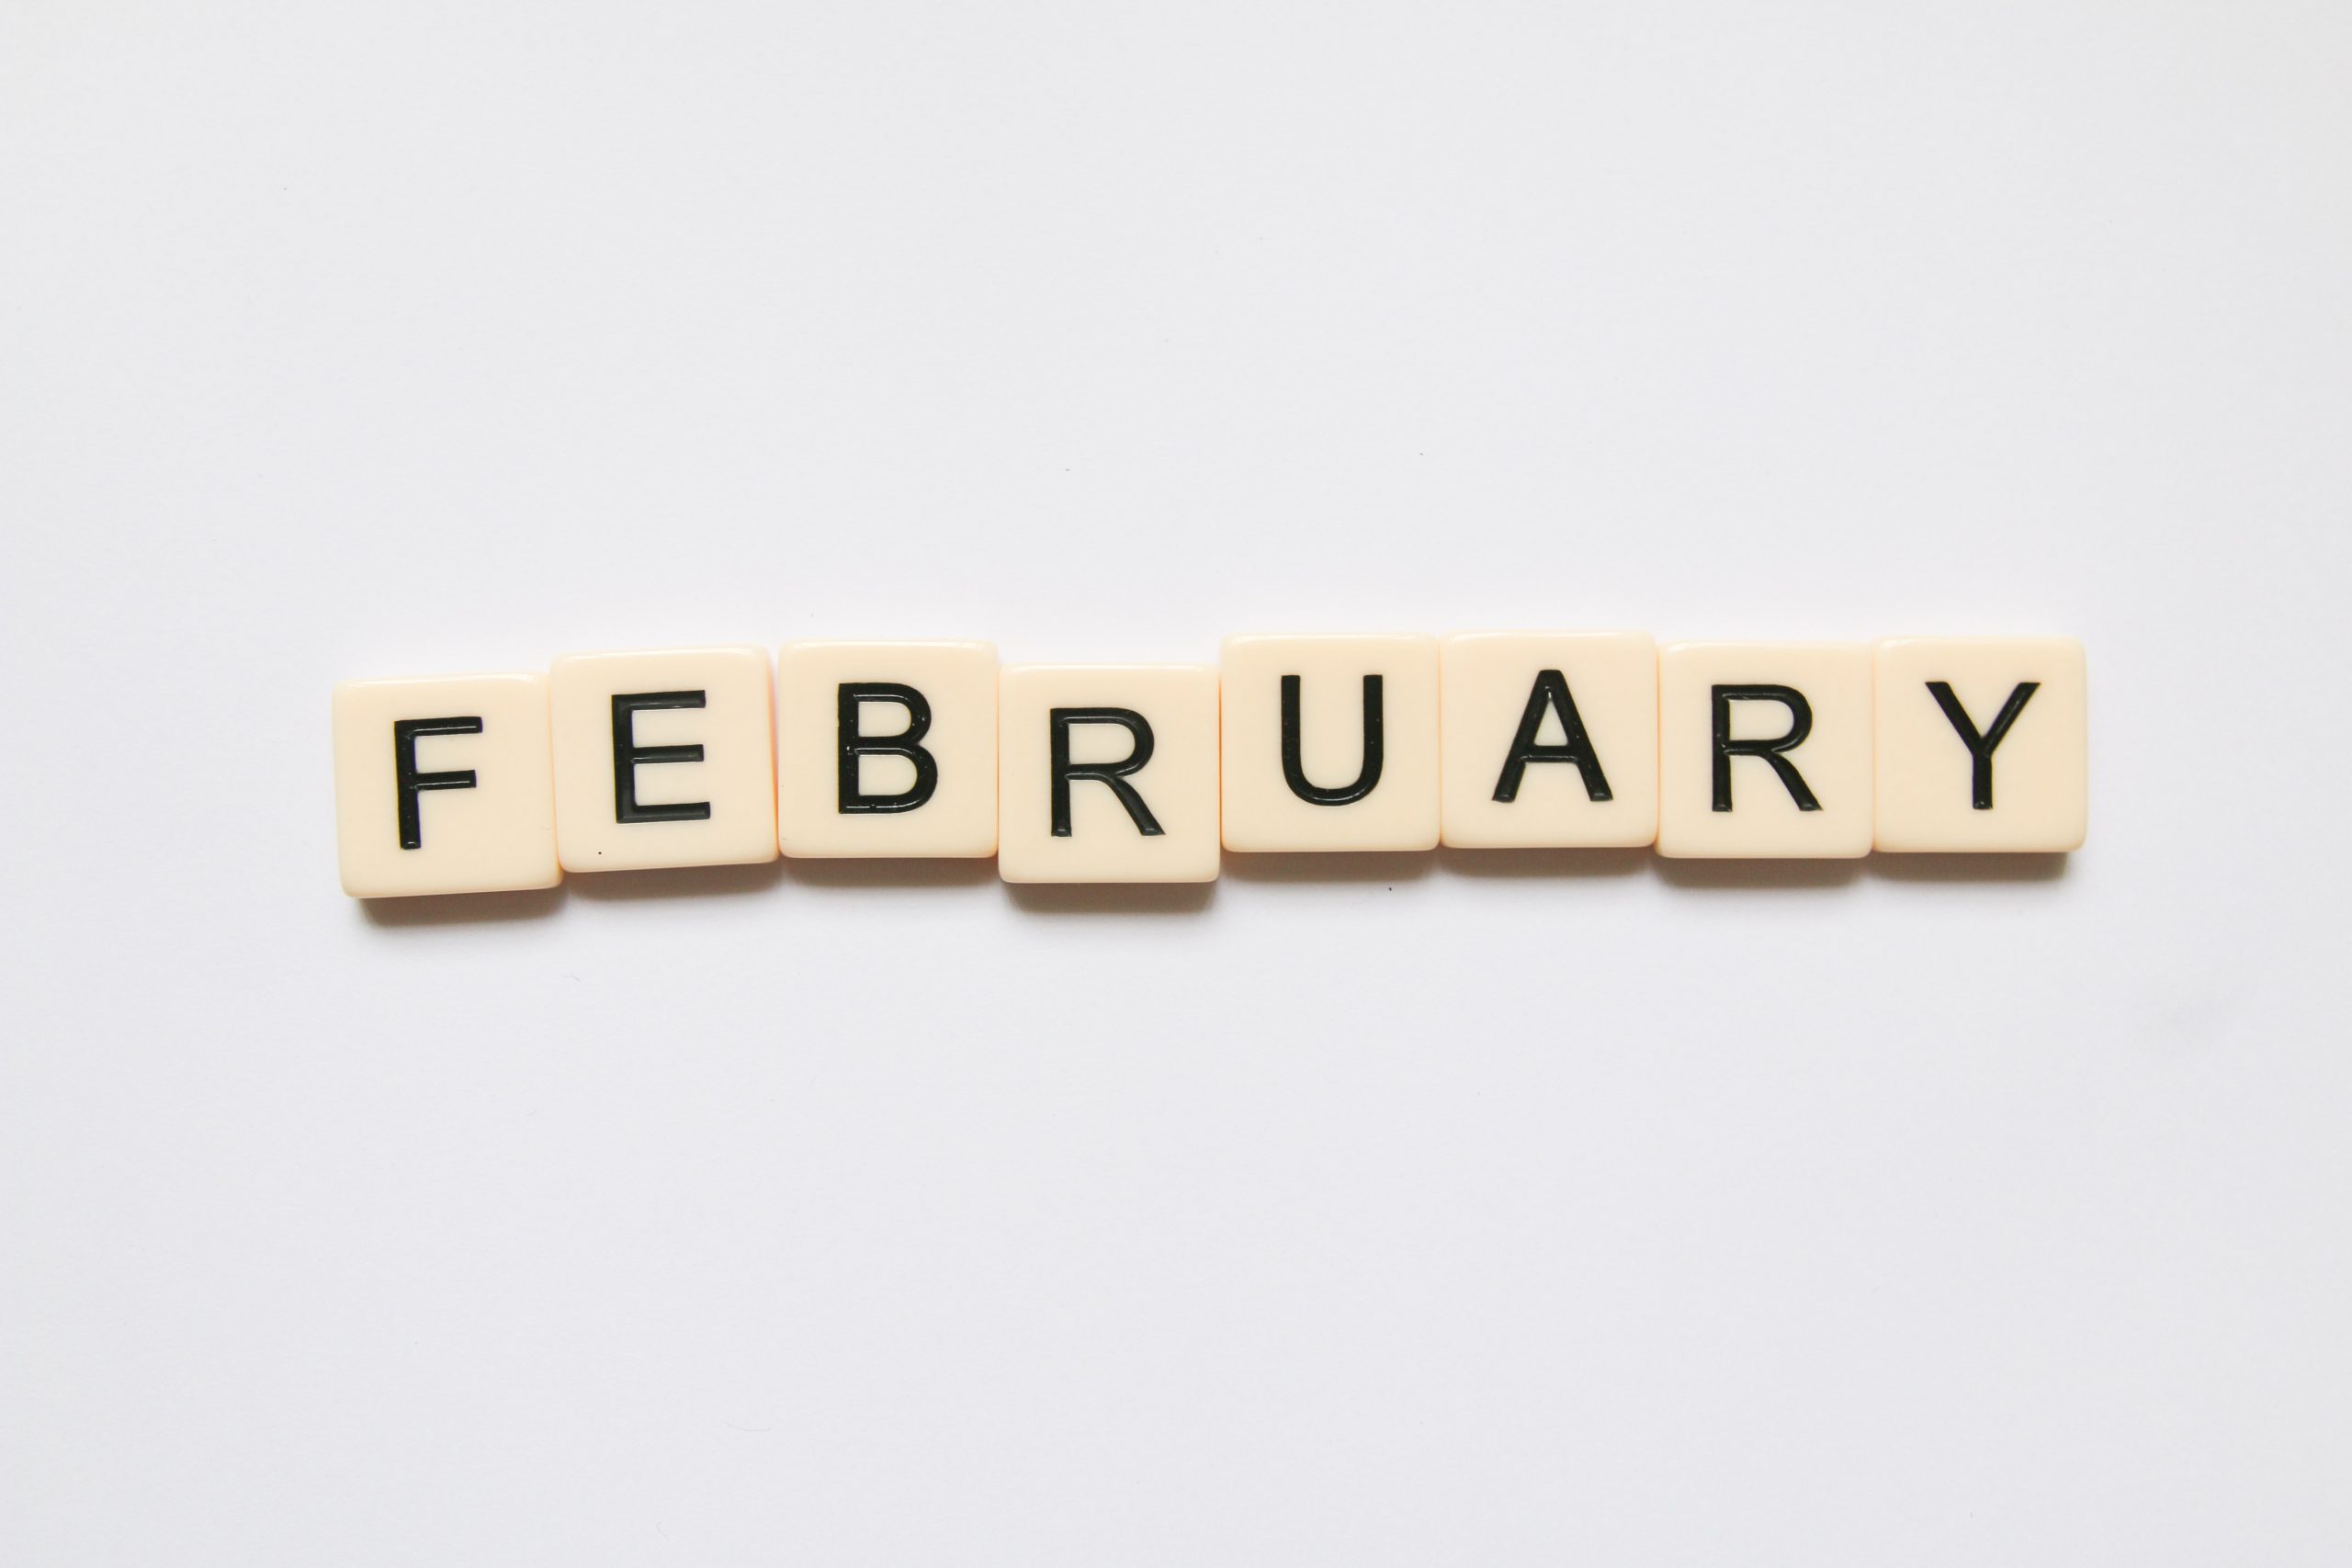 February written using wooden blocks